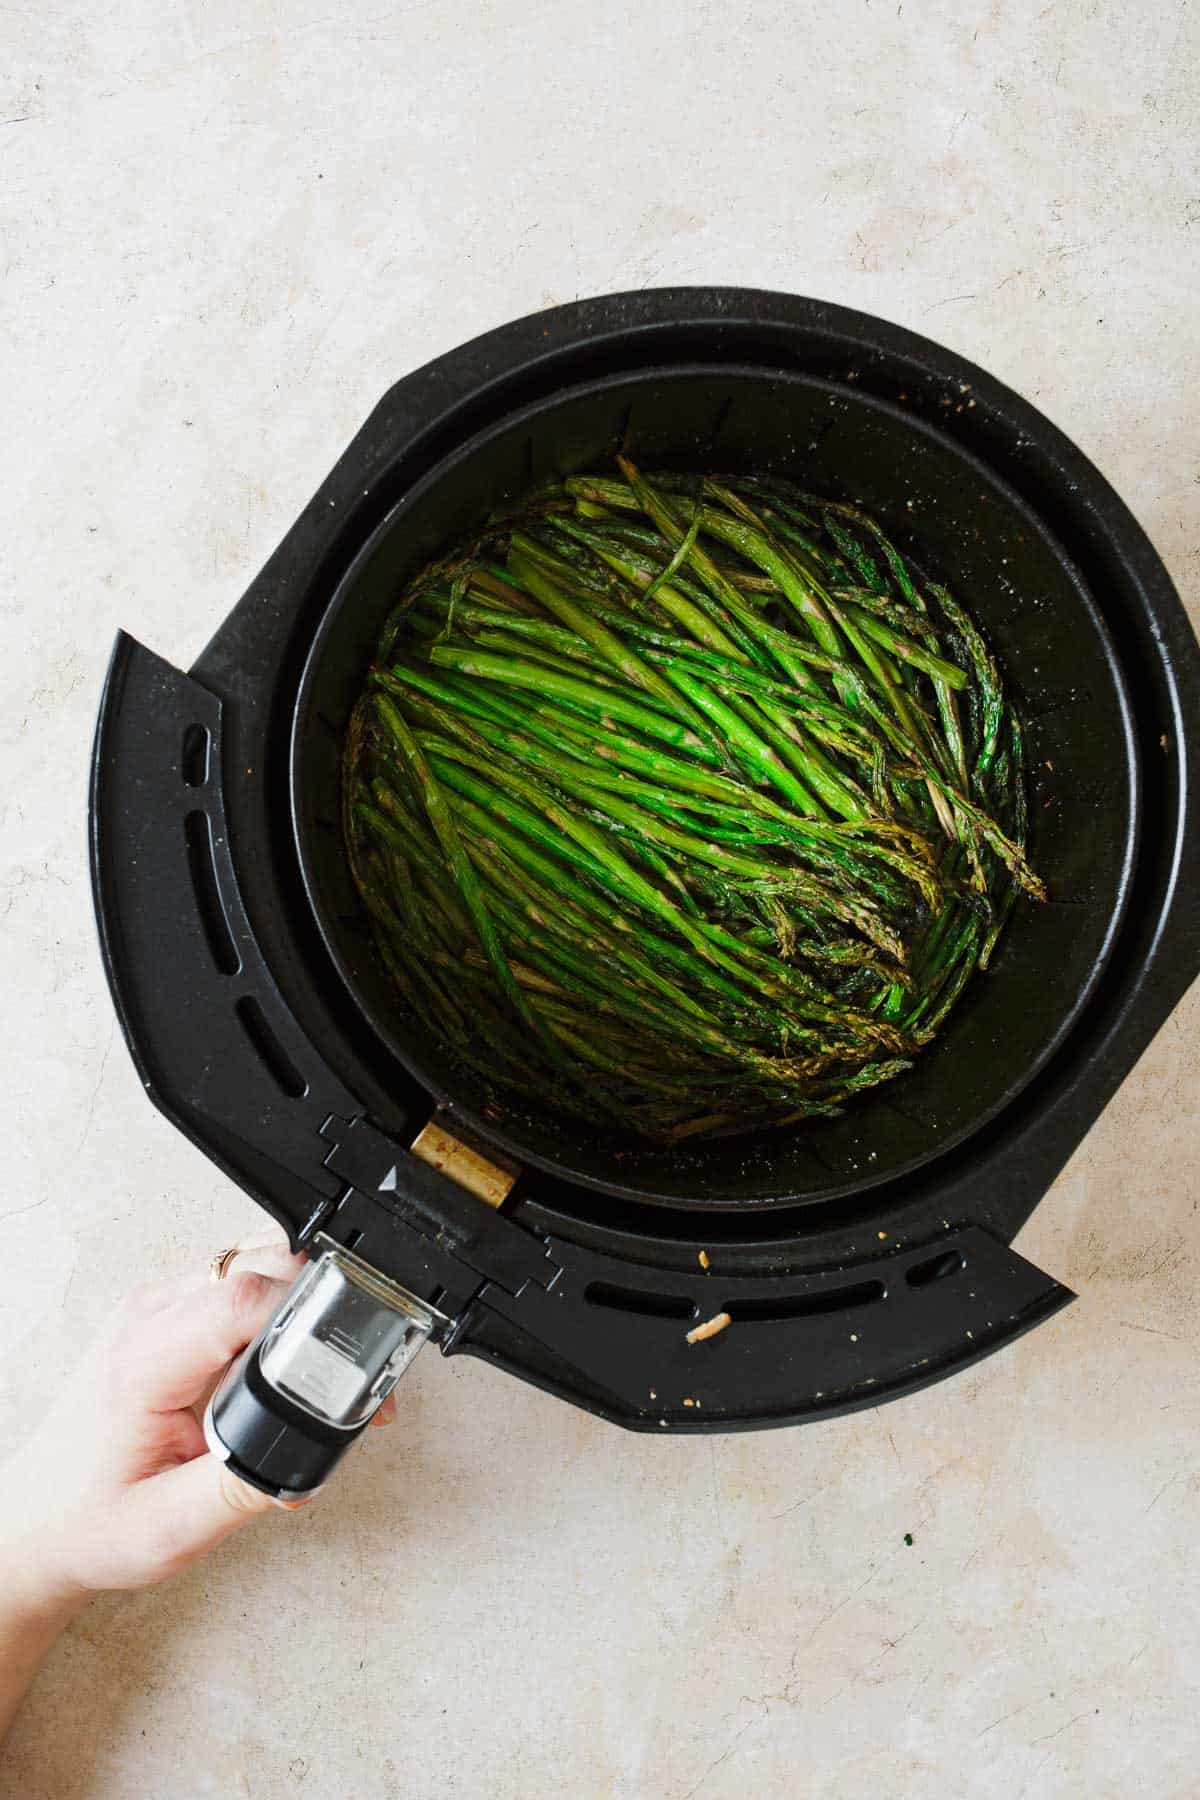 asparagus in air fryer basket